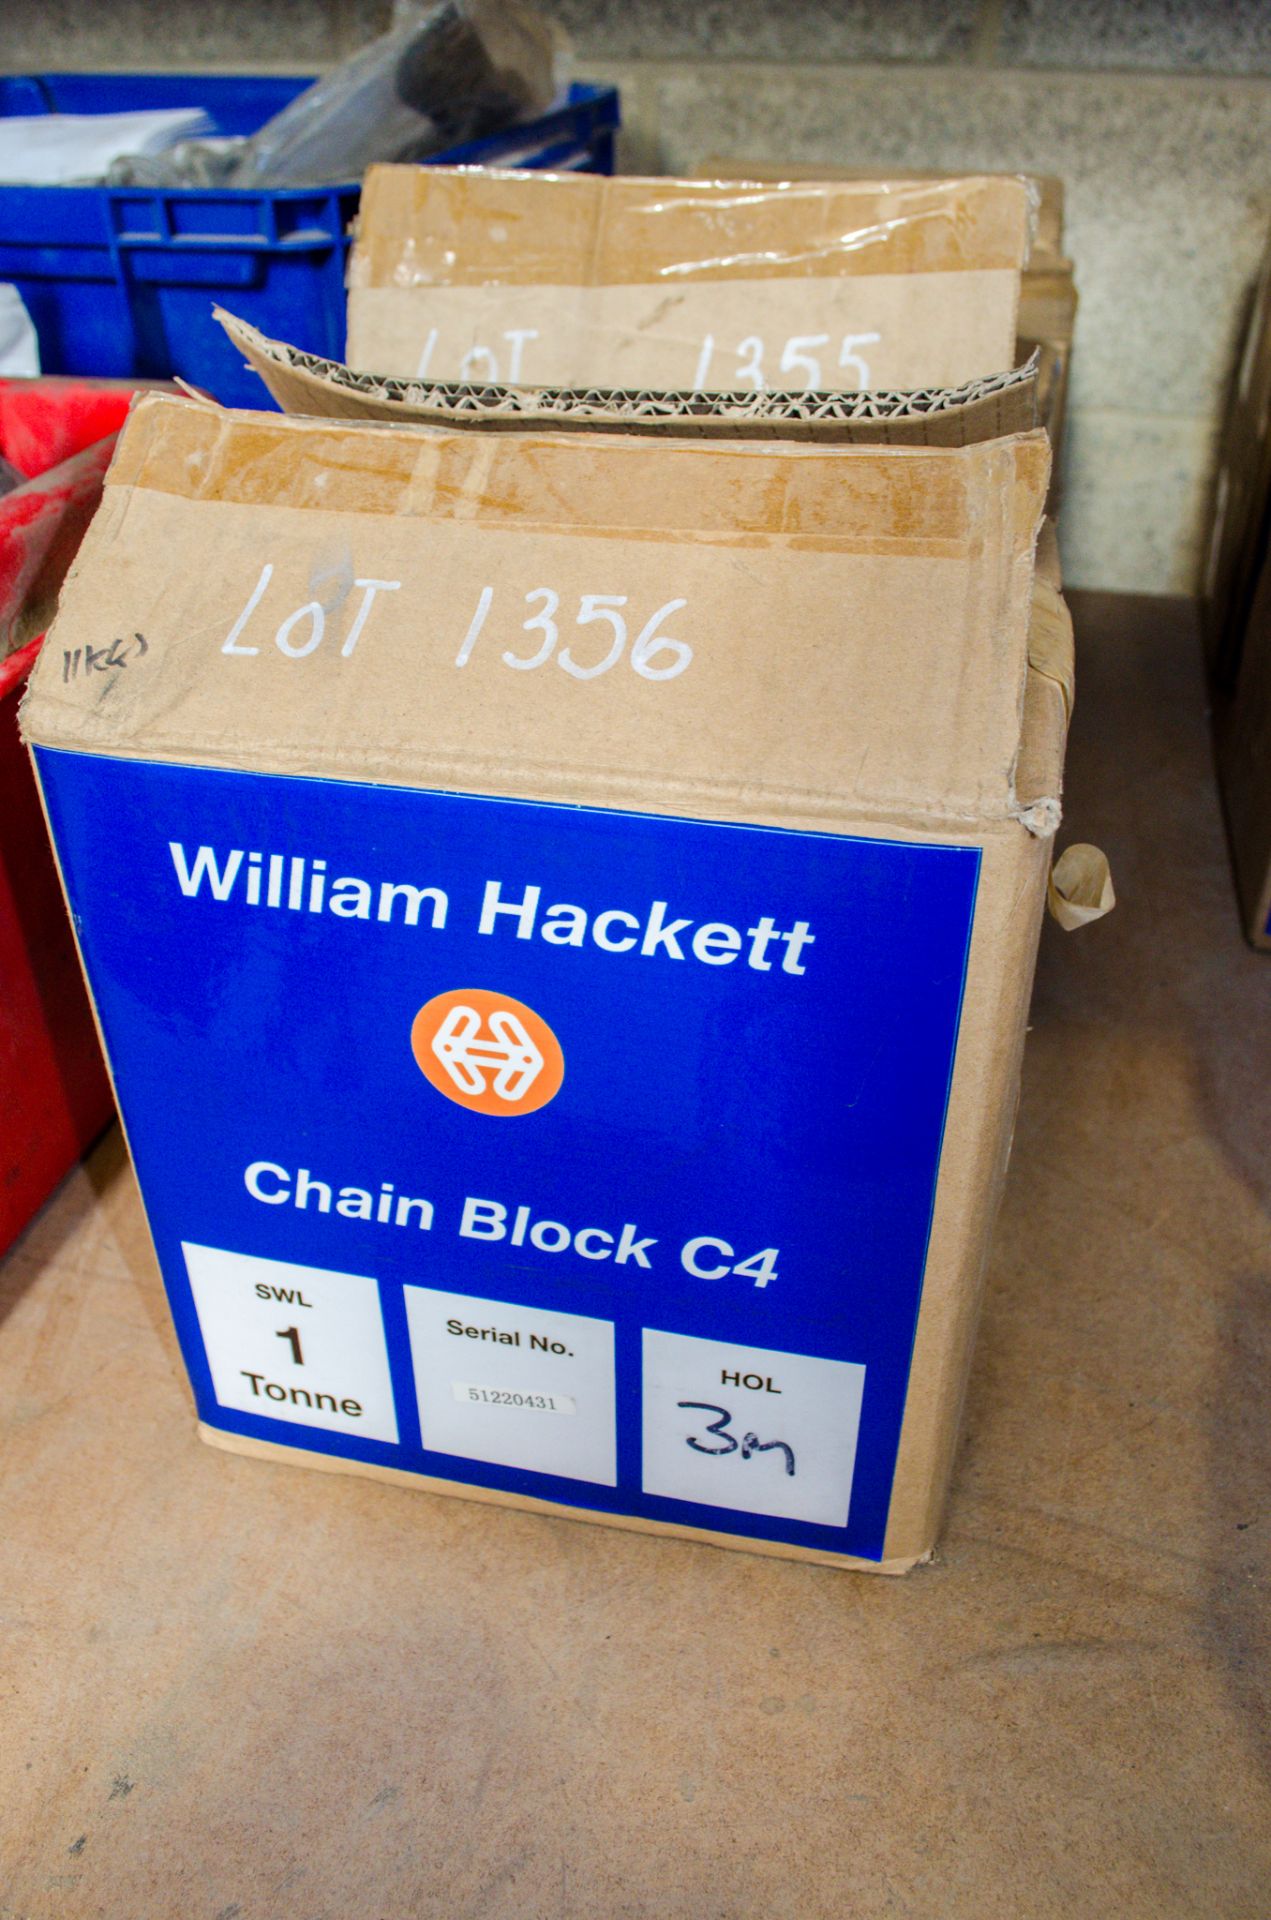 William Hackett 1 tonne chain block ** New and unused ** - Image 2 of 2